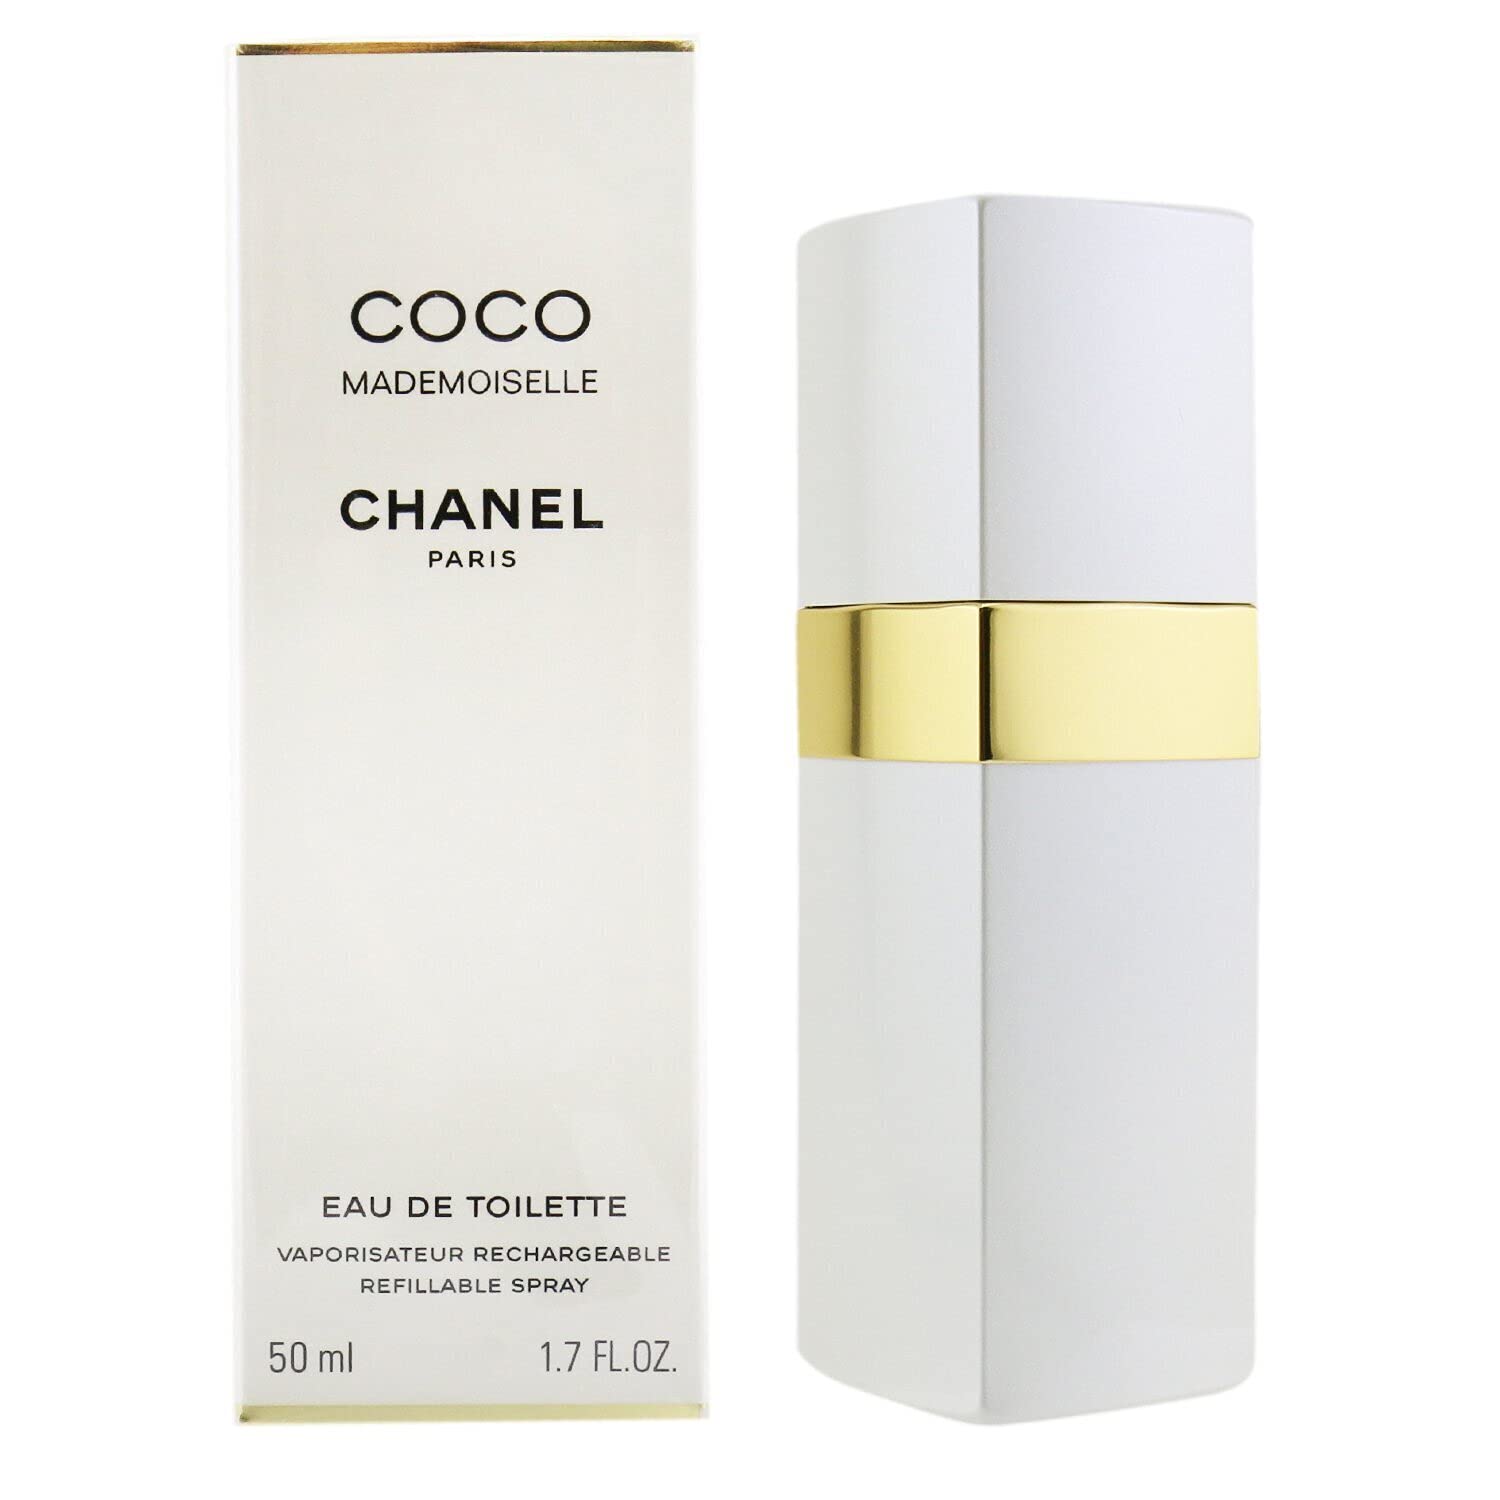 Coco Eau de Toilette Chanel perfume  a fragrance for women